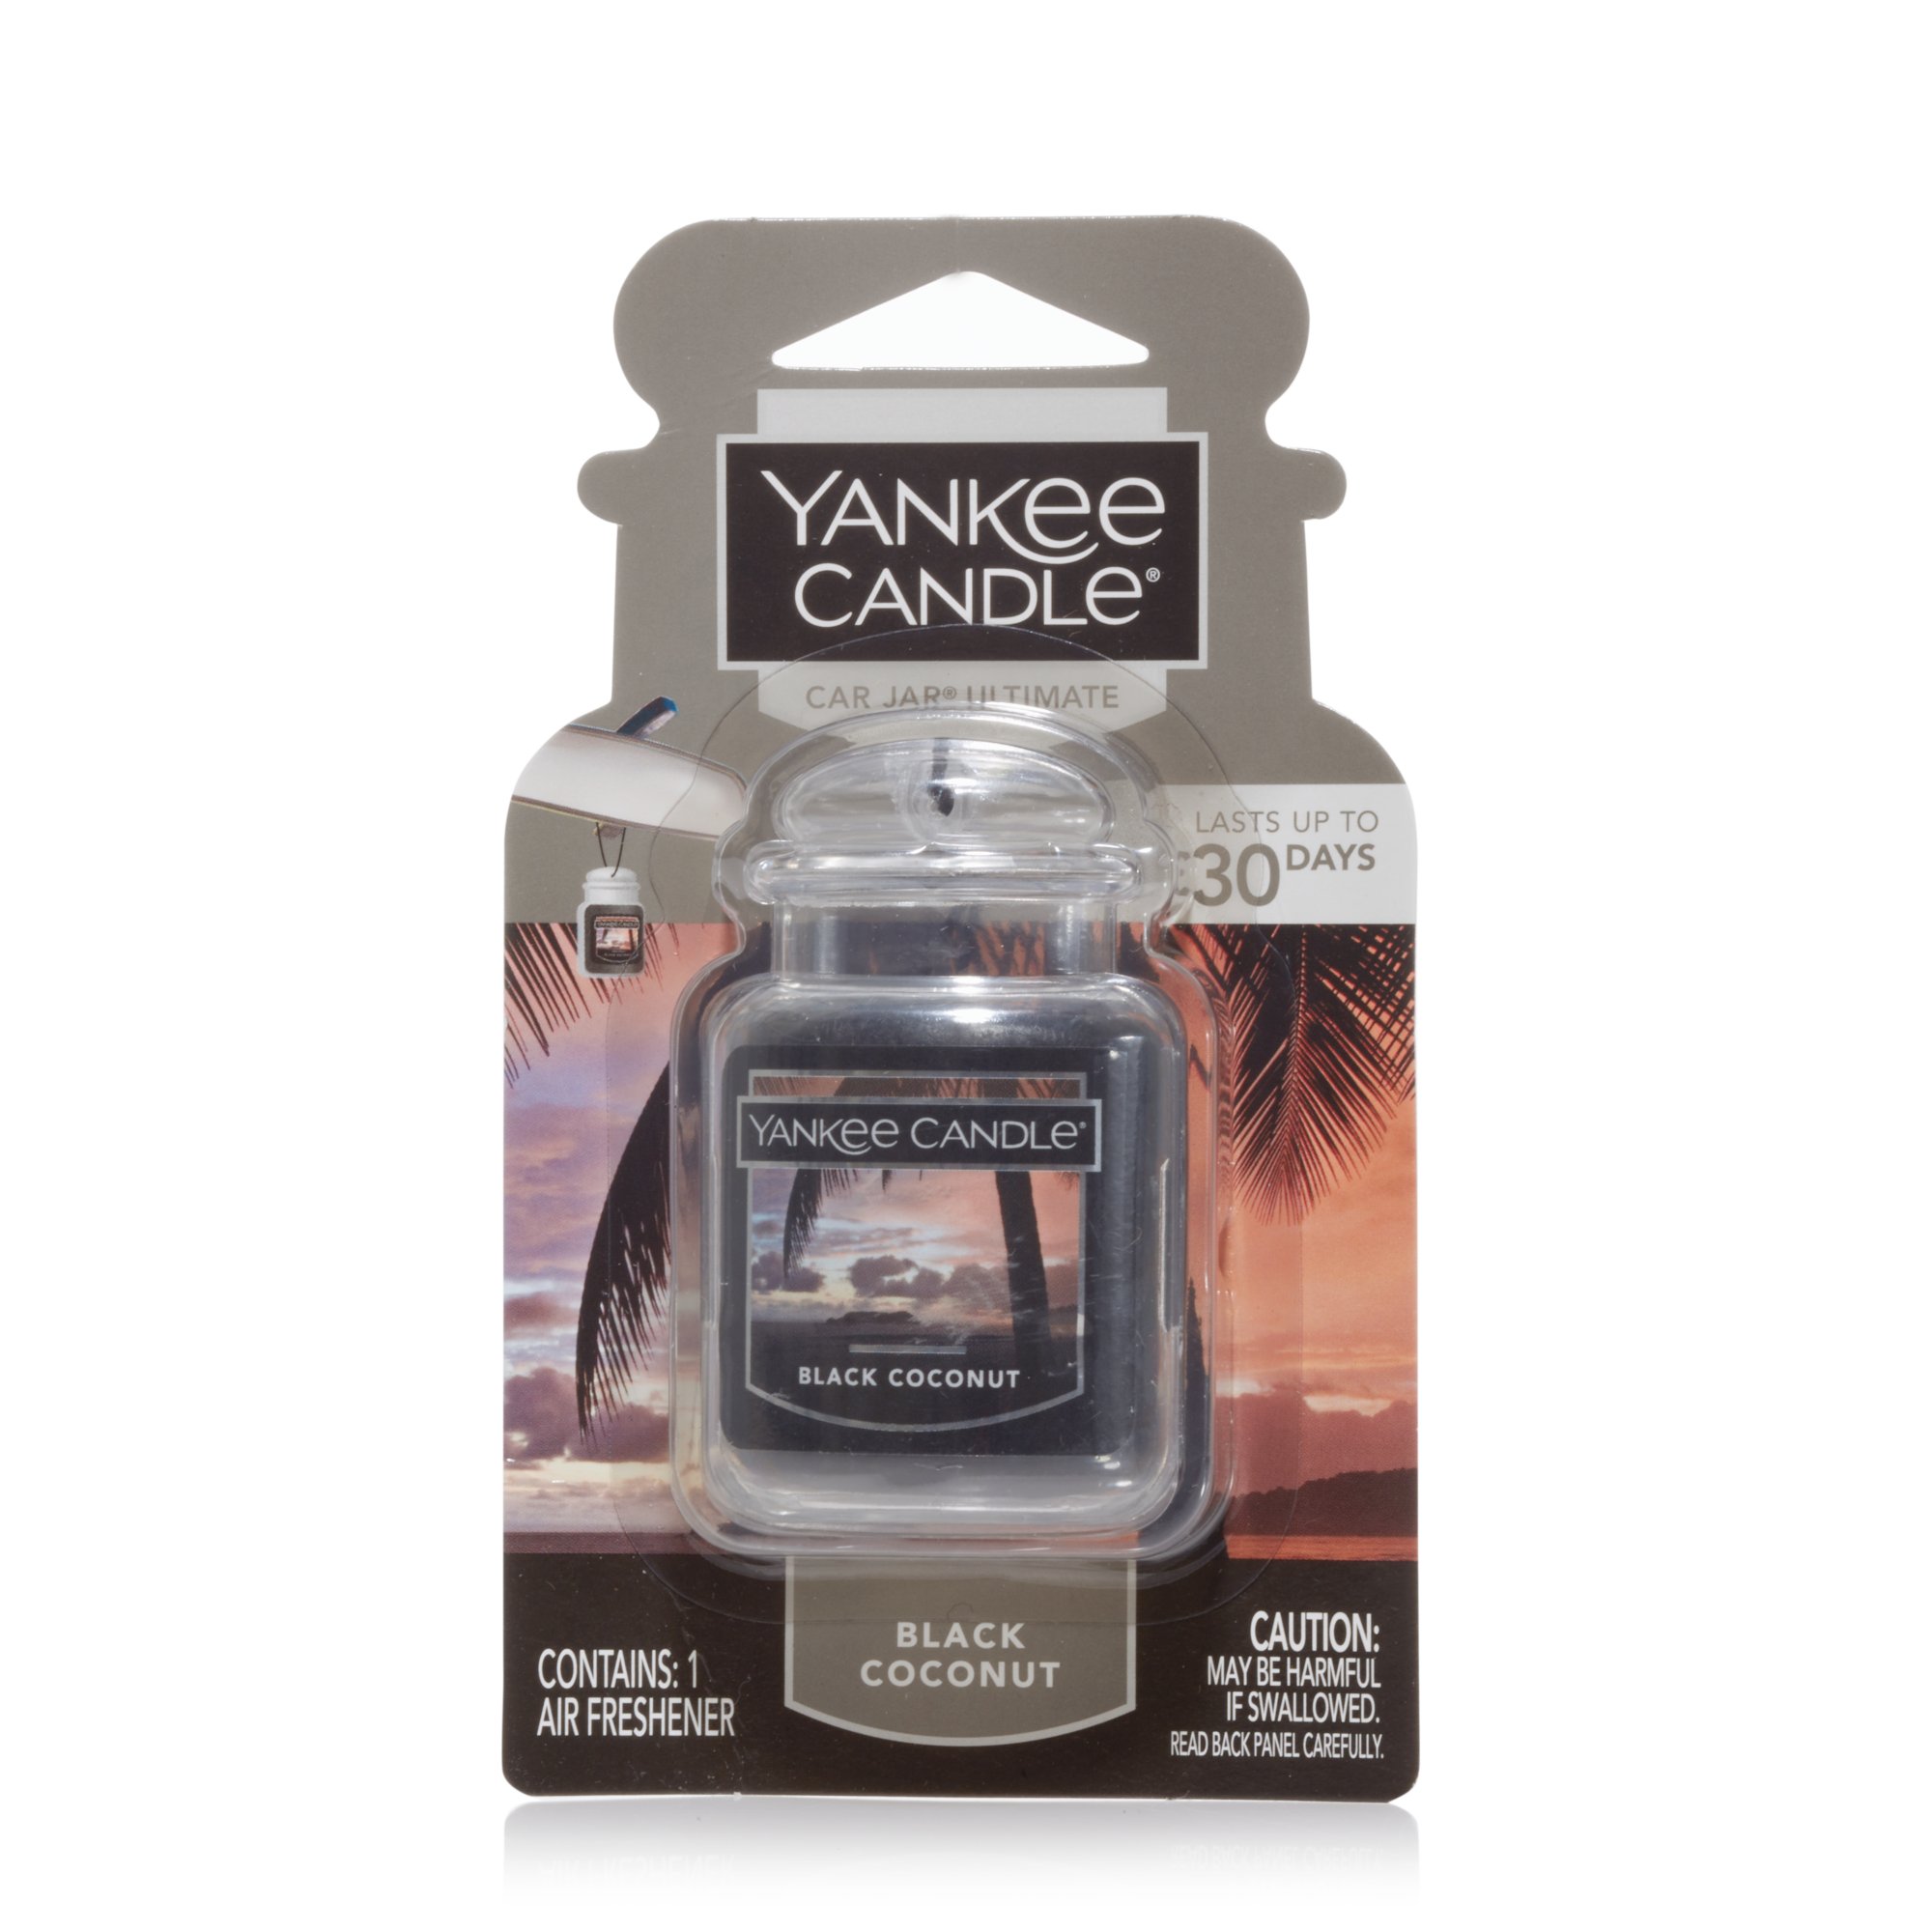 YANKEE CANDLE car jar ultimate Black Coconut YCJUBC2 